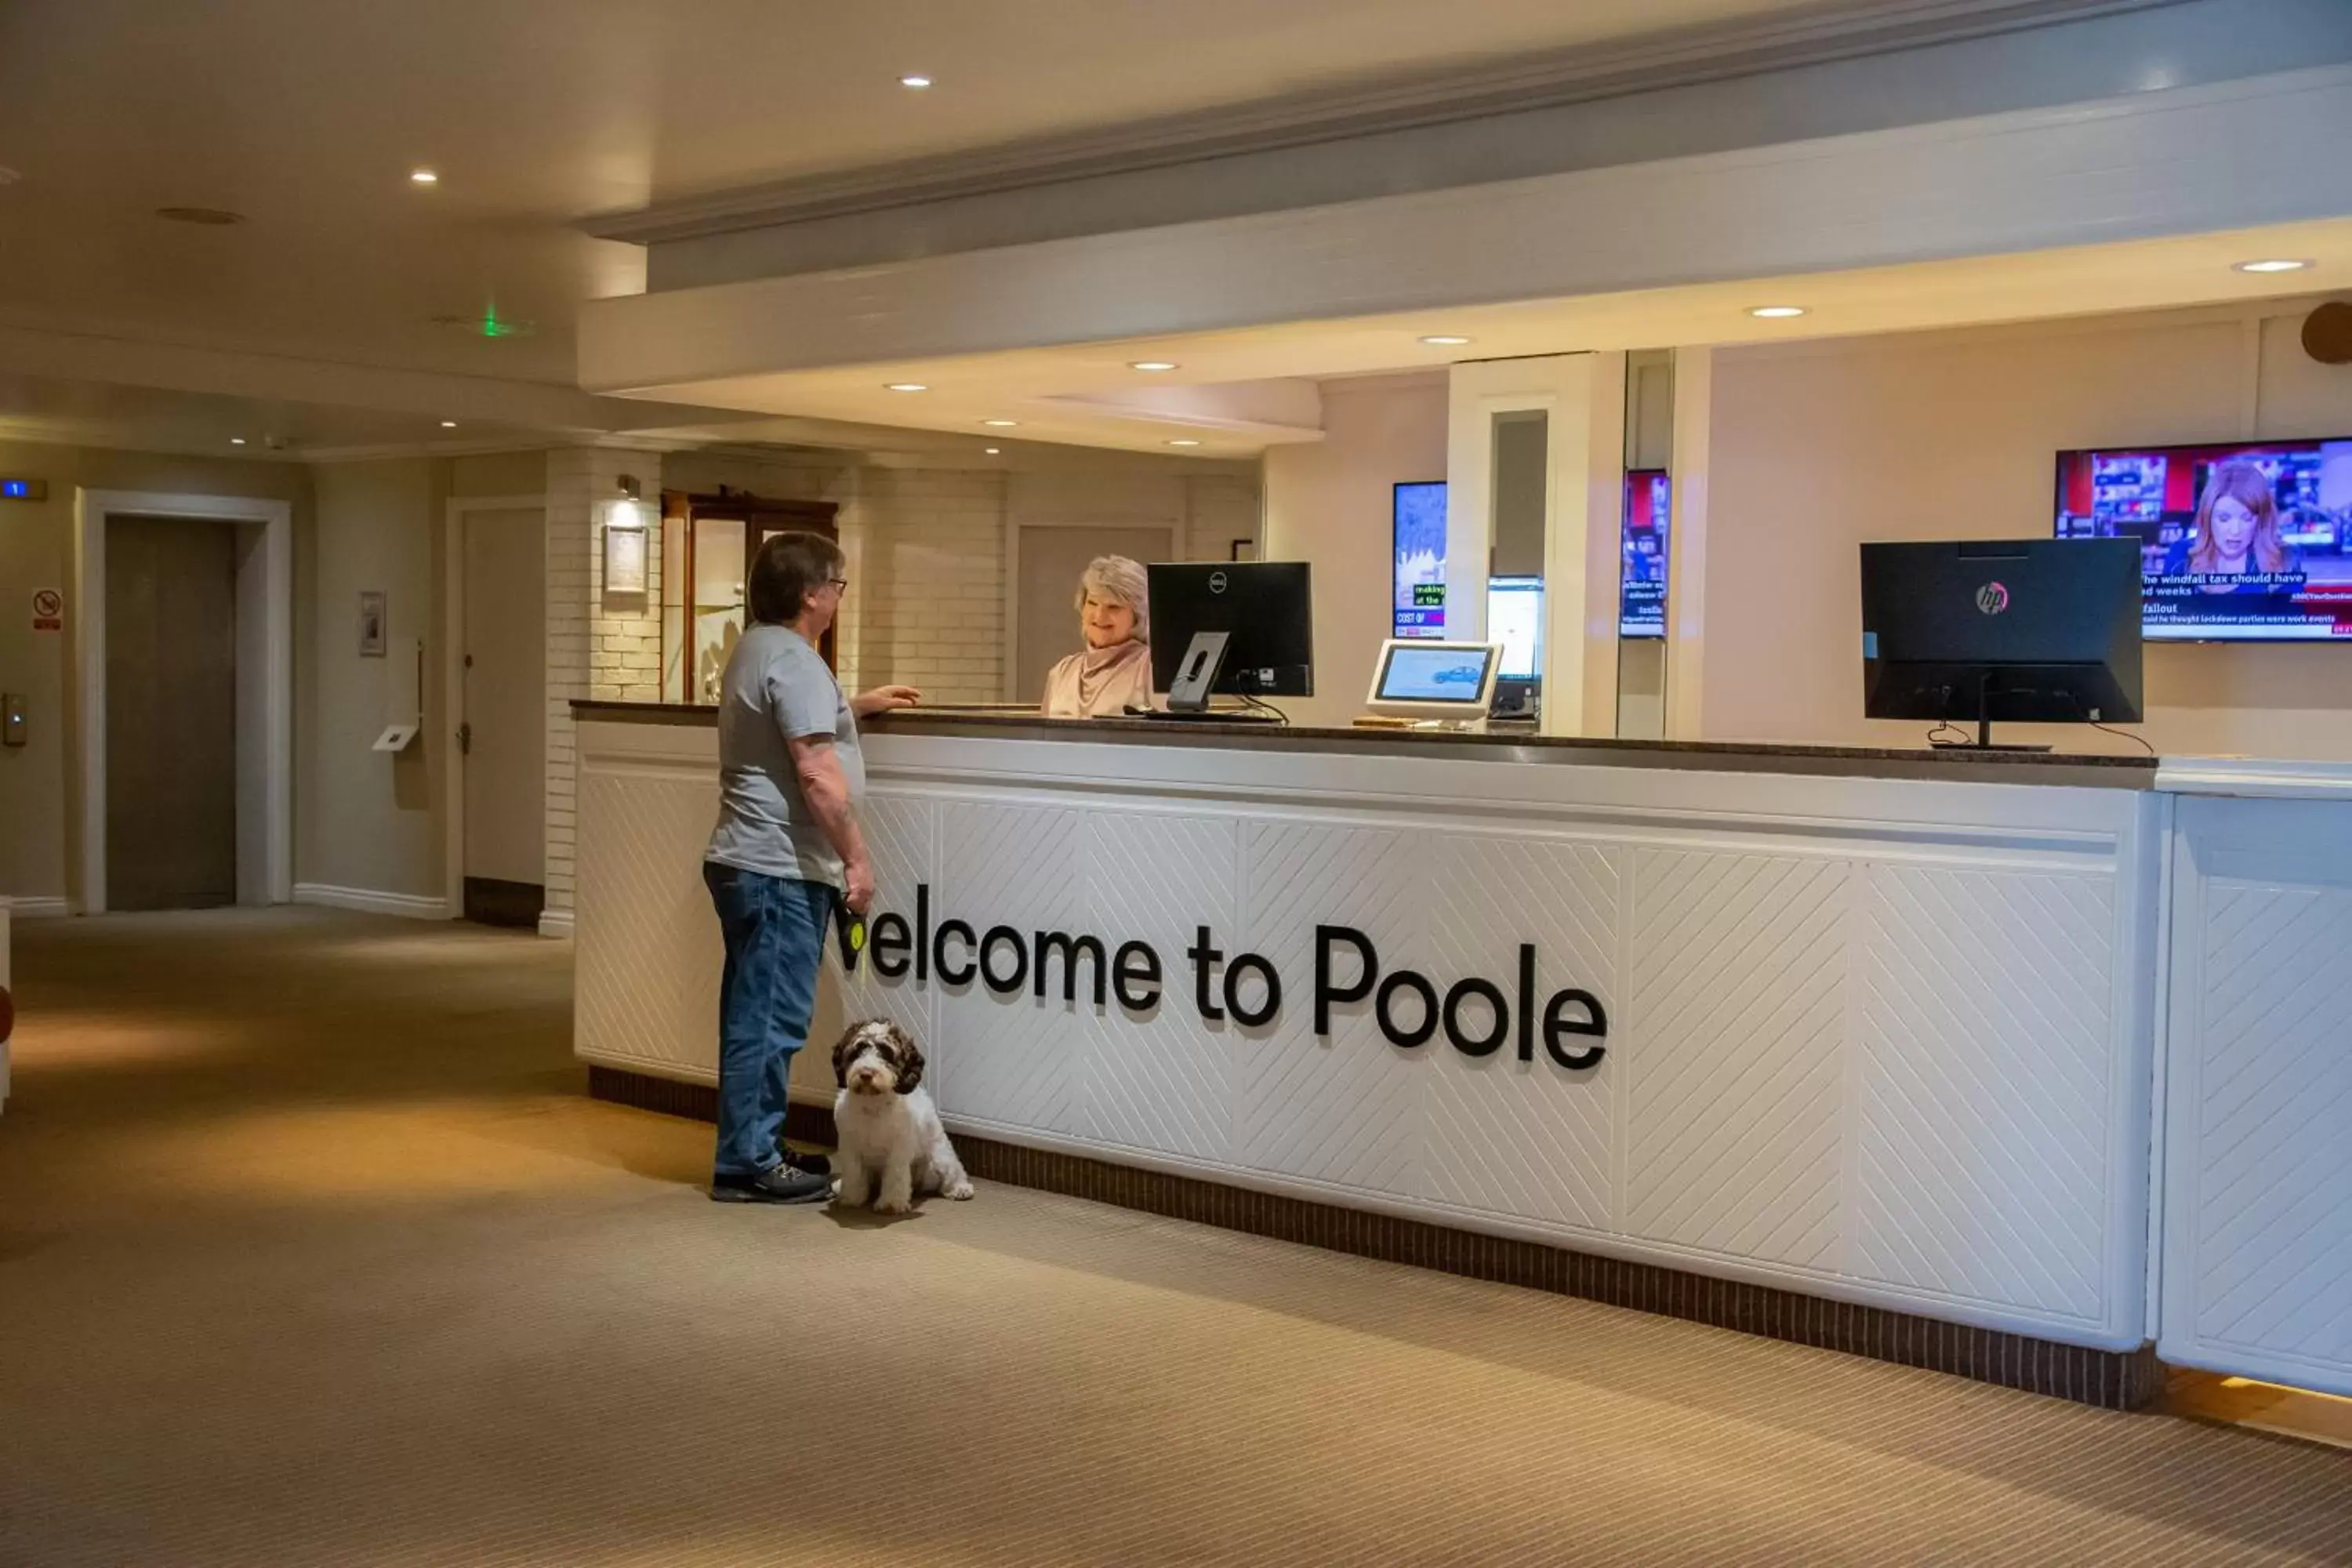 Poole Quay Hotel